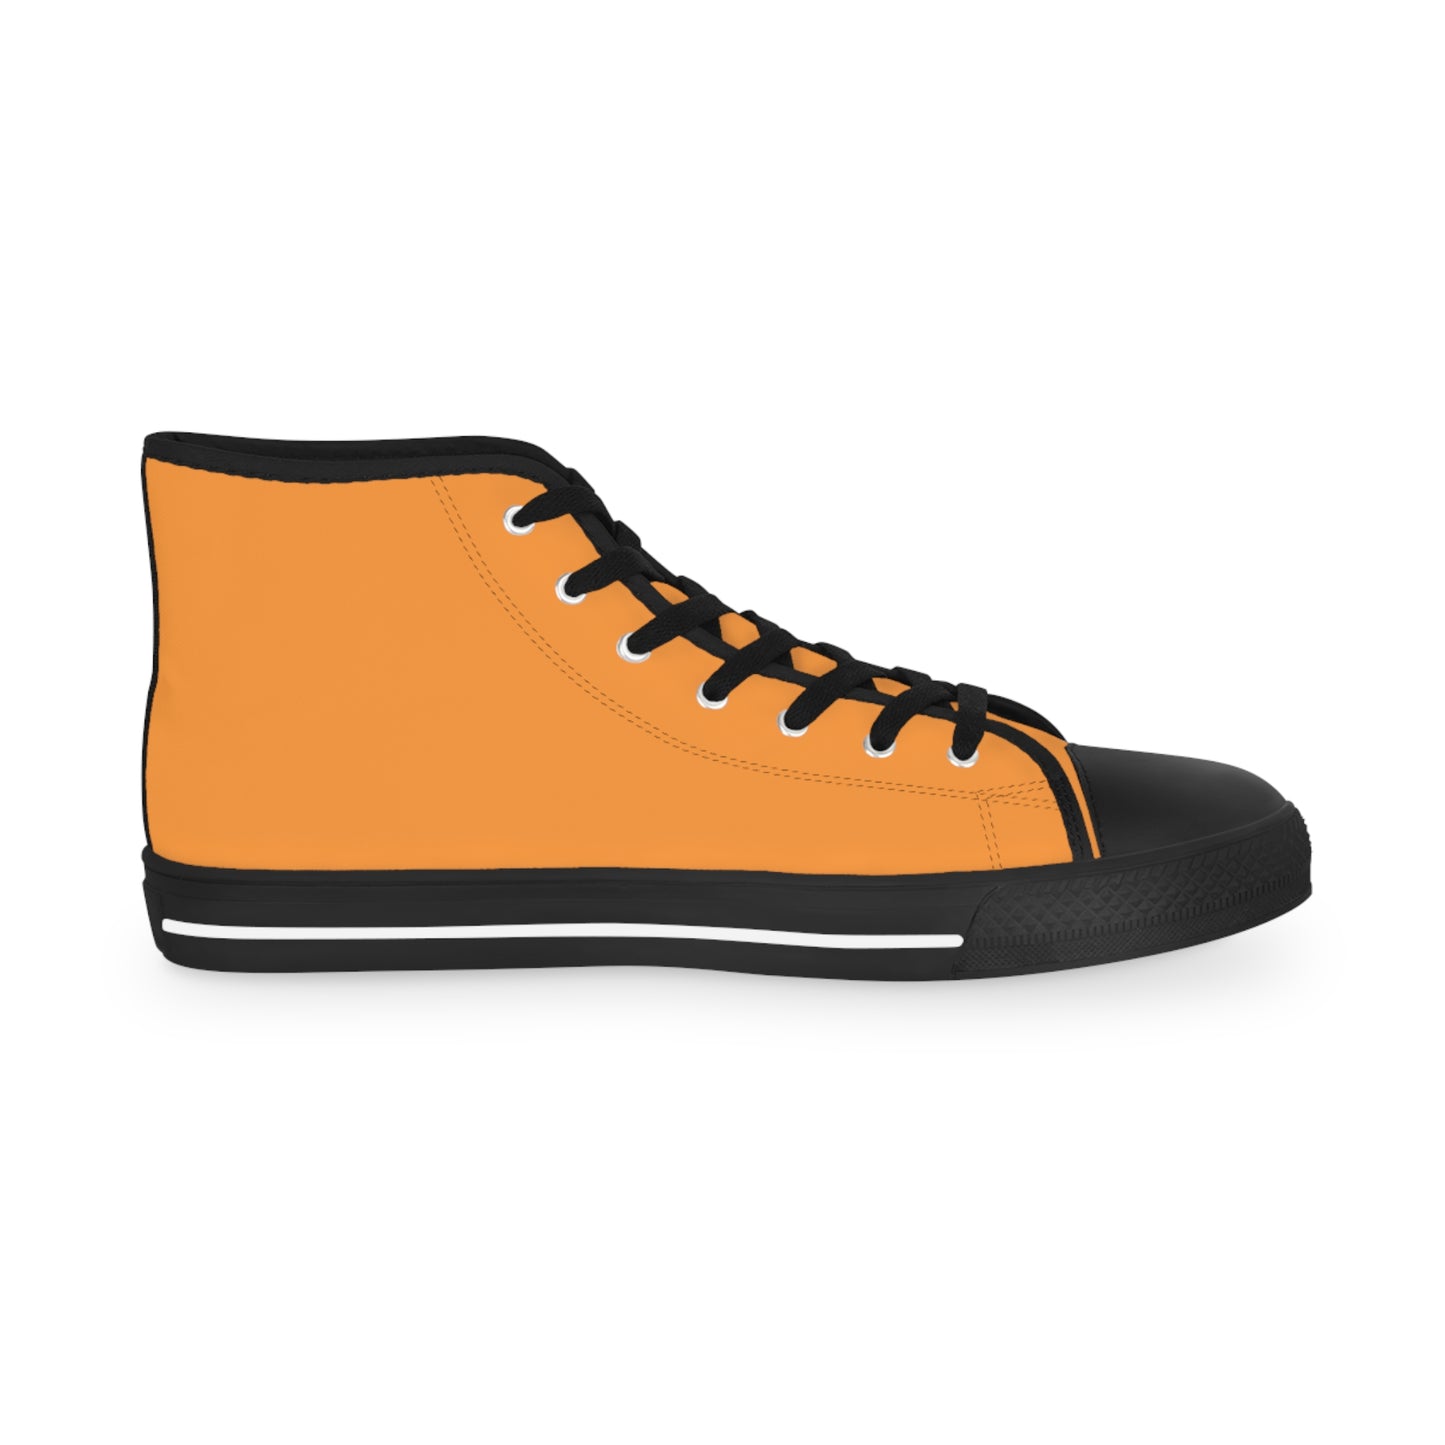 Men's High Top Sneakers - Medium Orange US 14 White sole